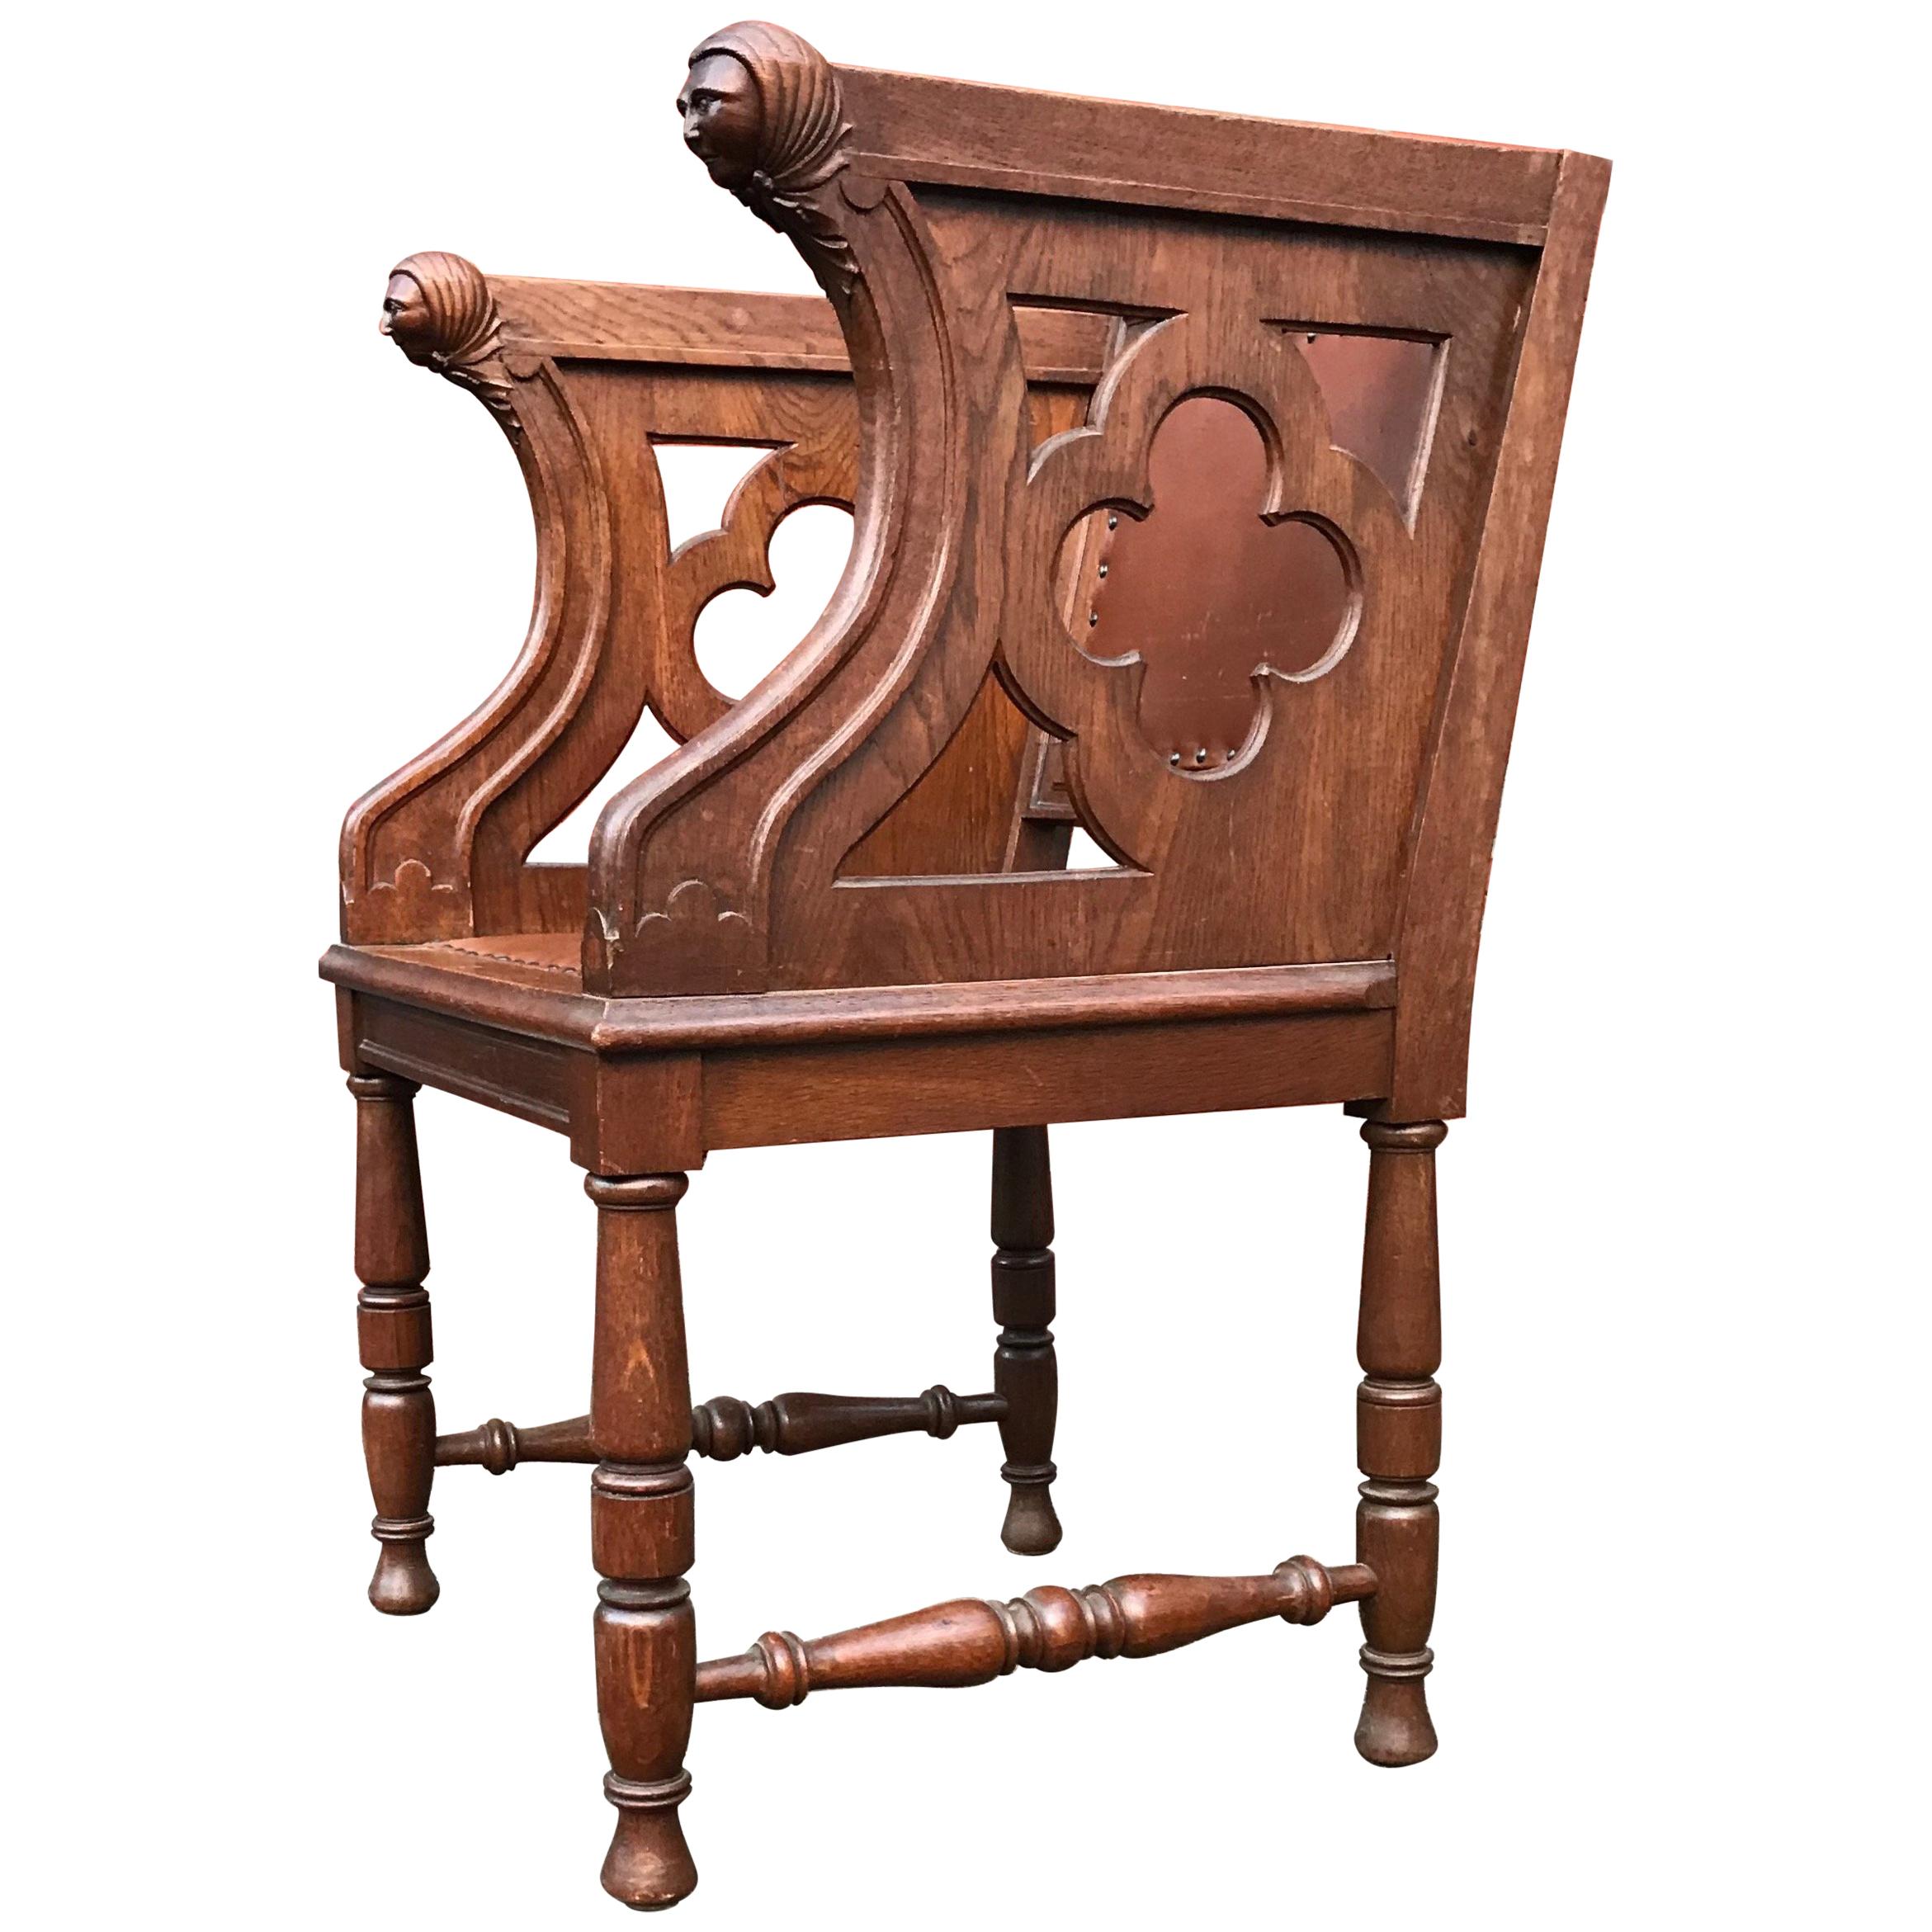 Rare Antique Gothic Revival Oak Armchair Chair w Female Sculptures in Armrests